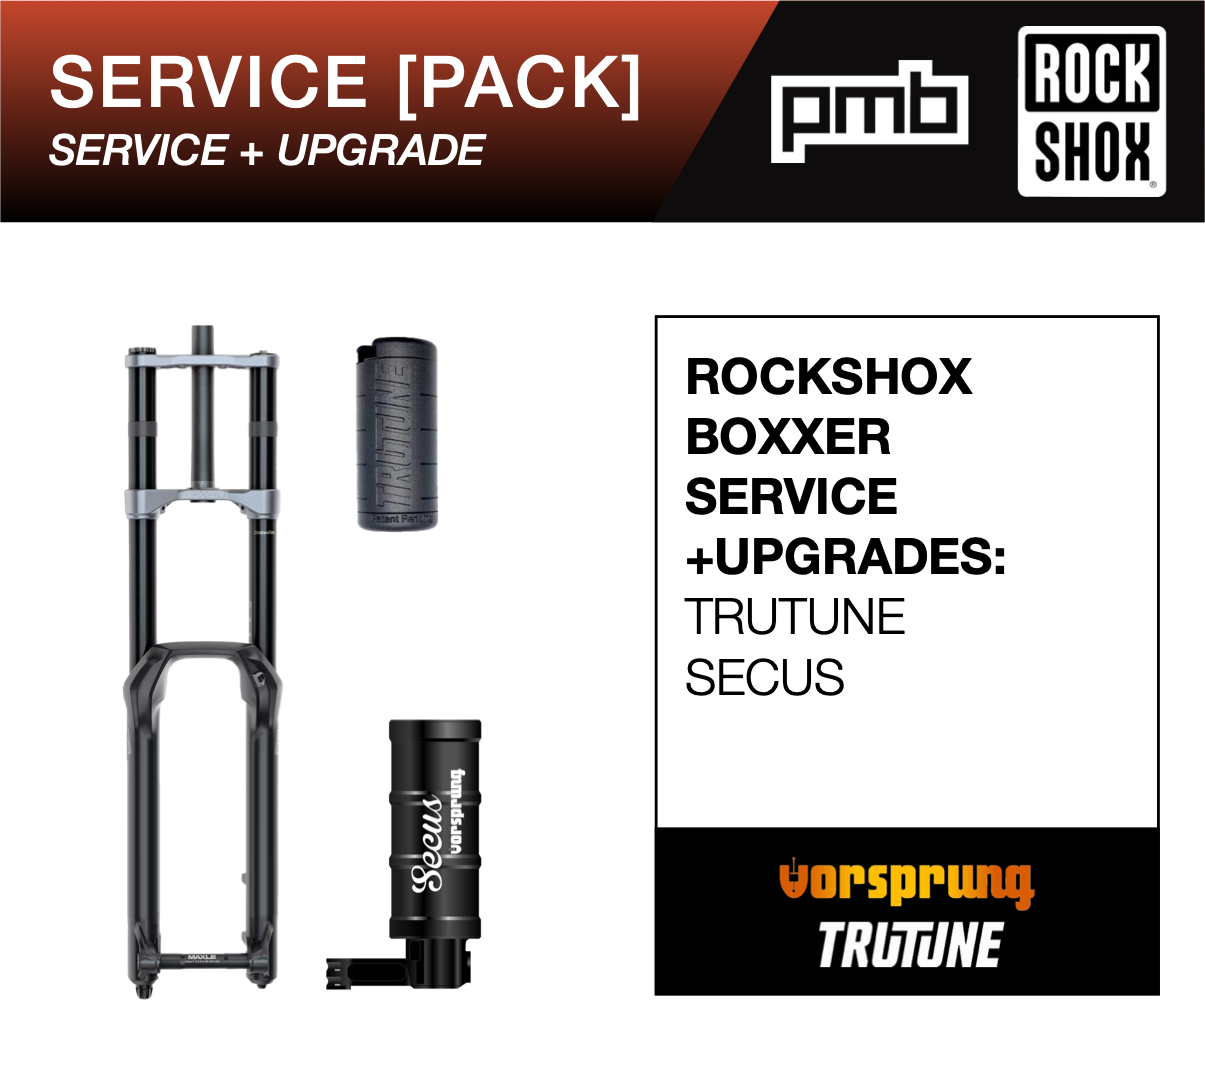 Service+Upgrade Rockshox Boxxer